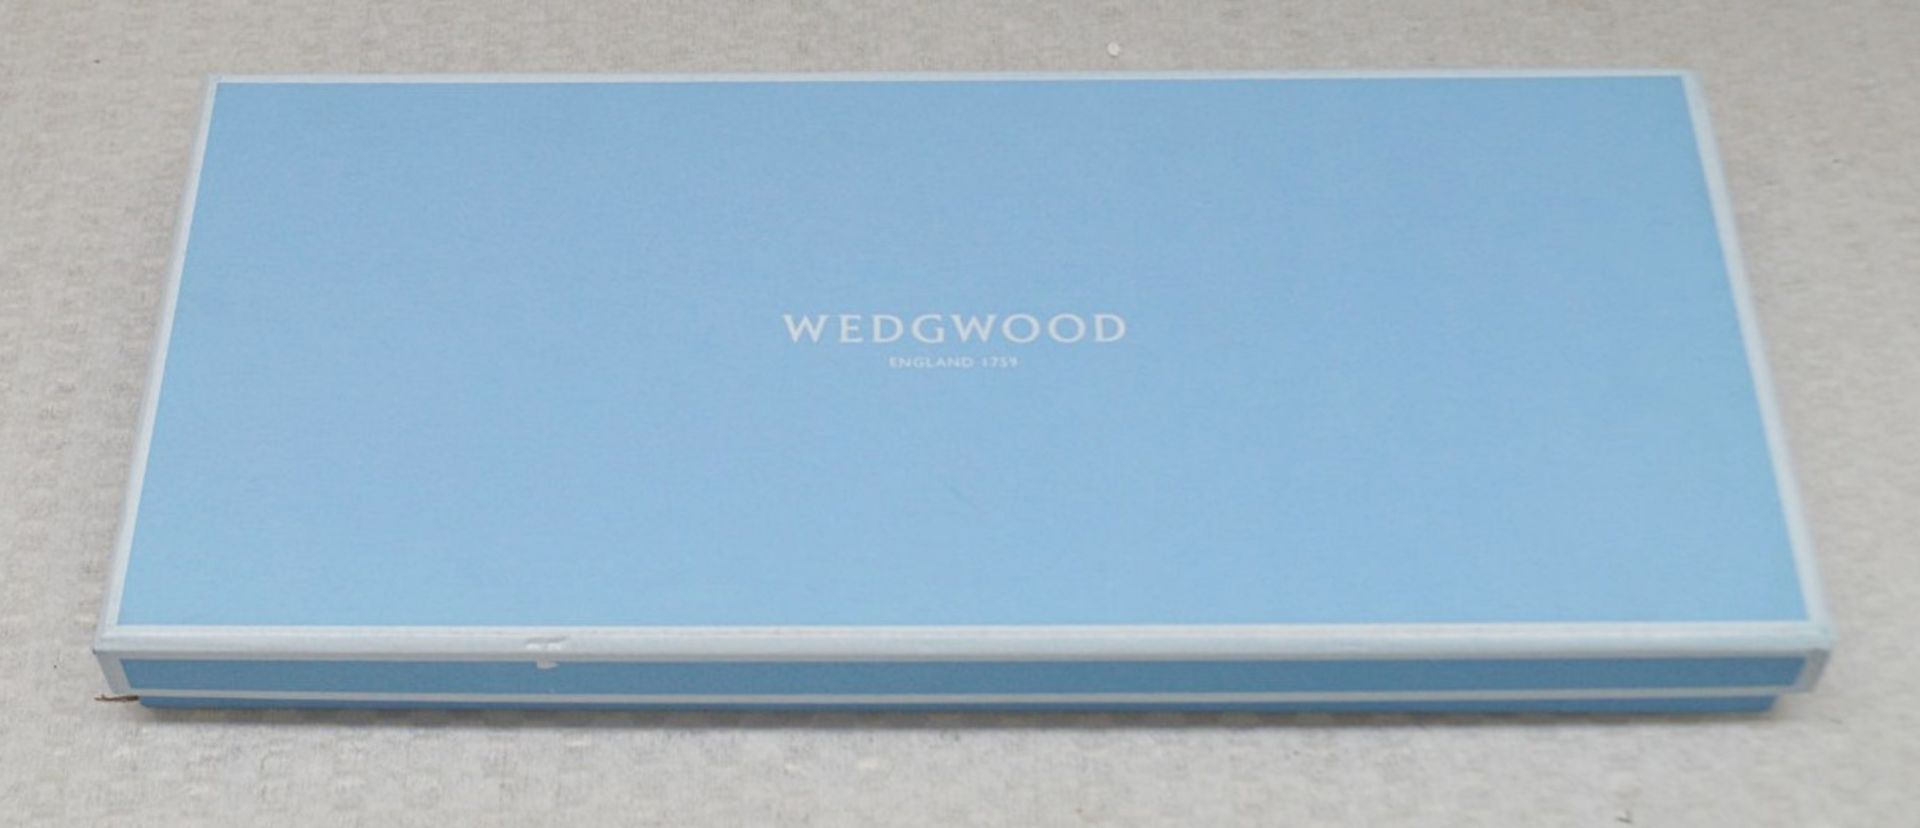 1 x Wedgewood 'Paeonia Blush' Bone China Sandwich Tray - Dimensions To Follow - Ref: HHW81/JUL21/ - Image 3 of 3